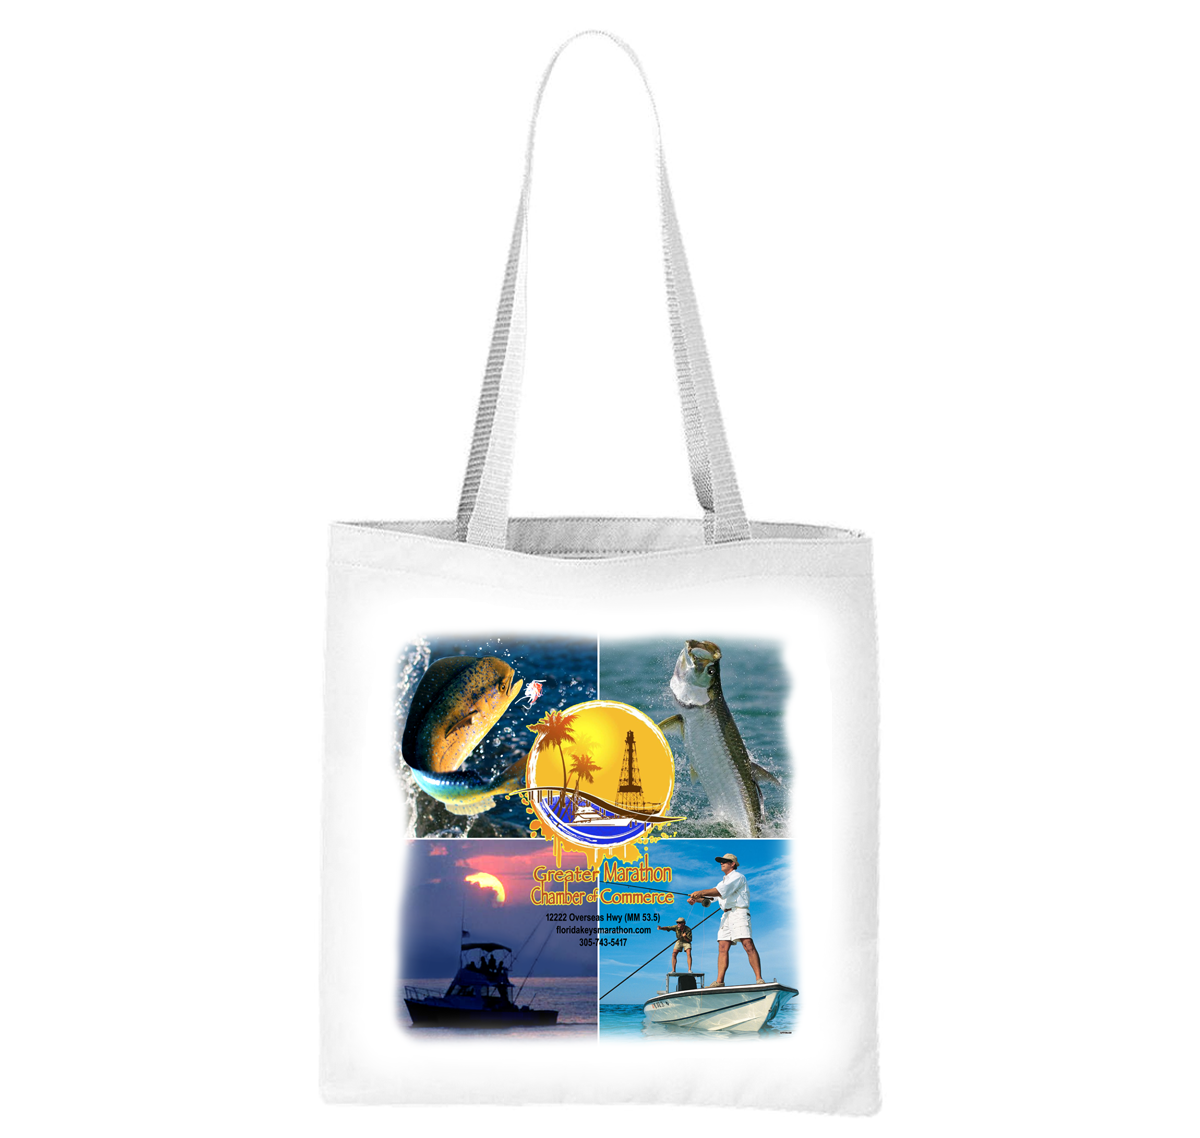 Design 3 - Marathon Chamber of Commerce Liberty Bag